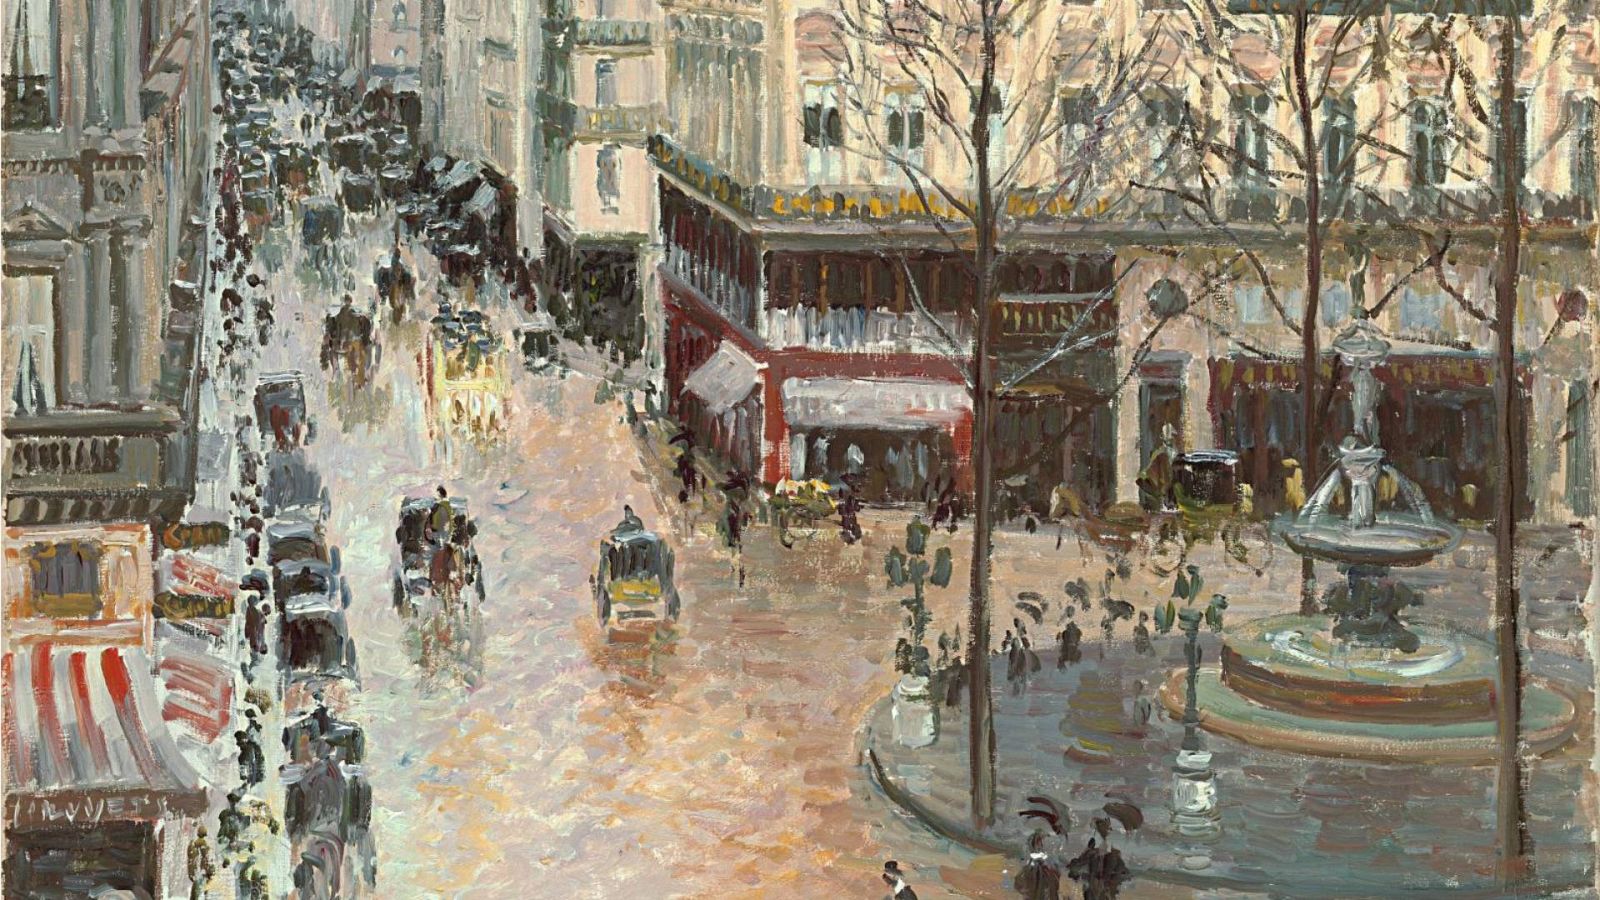 Imagen de la obra "Rue Saint-Honoré, après midi, effet de plui" de Camille PissarroUn tribunal estadounidense ha fallado este martes a favor